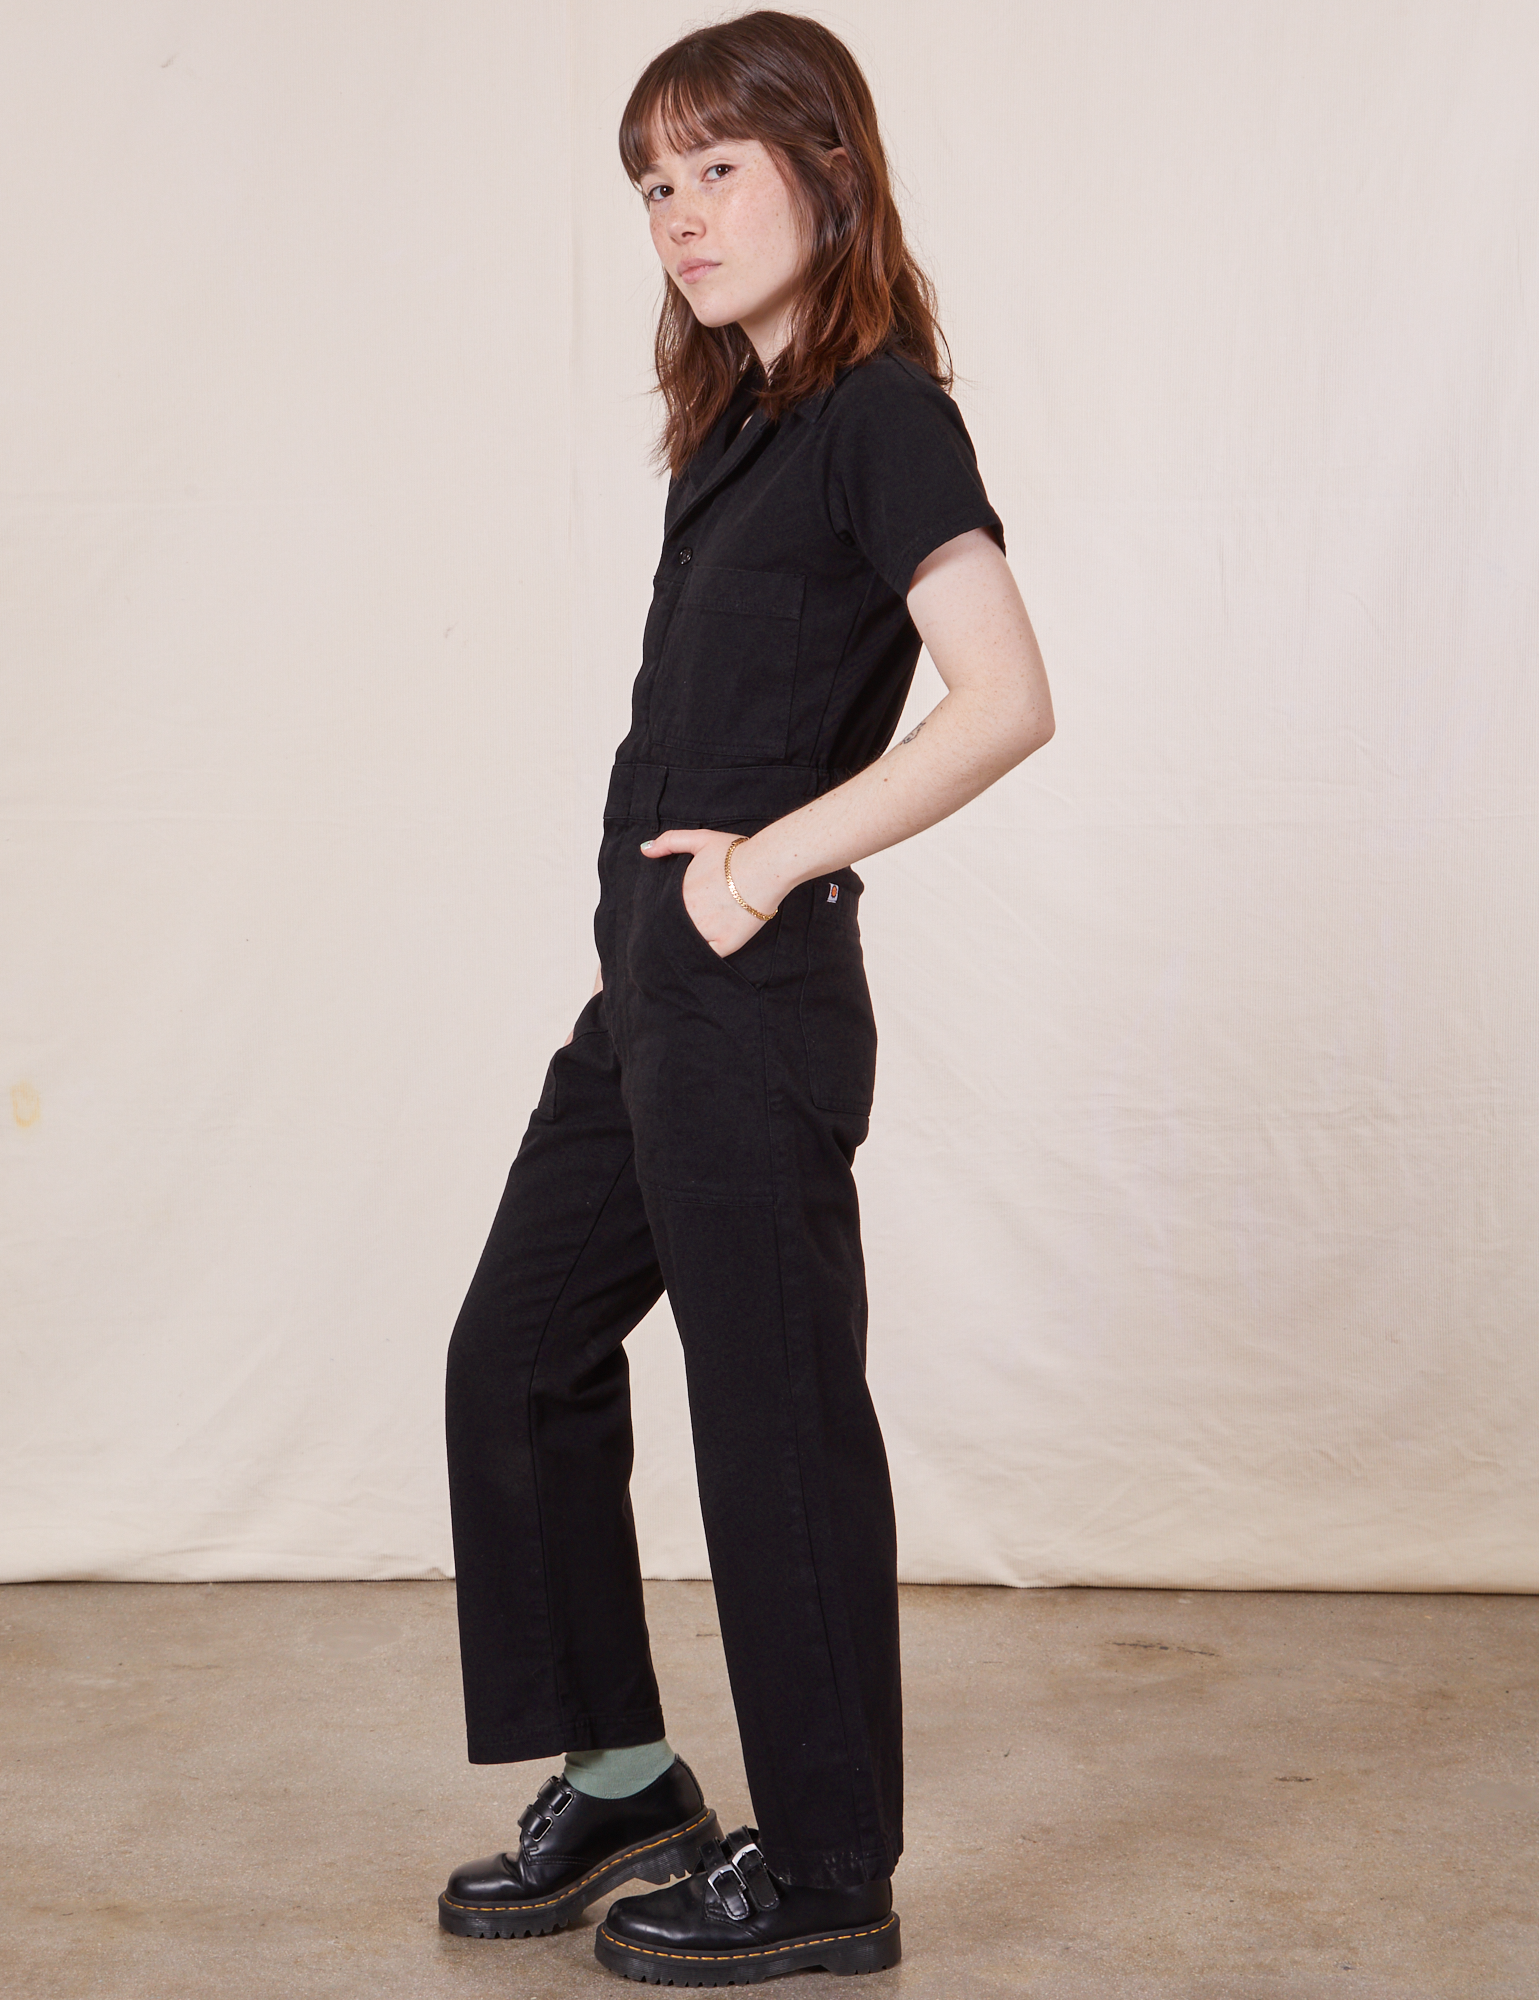 Petite Short Sleeve Jumpsuit in Basic Black side view on Hana